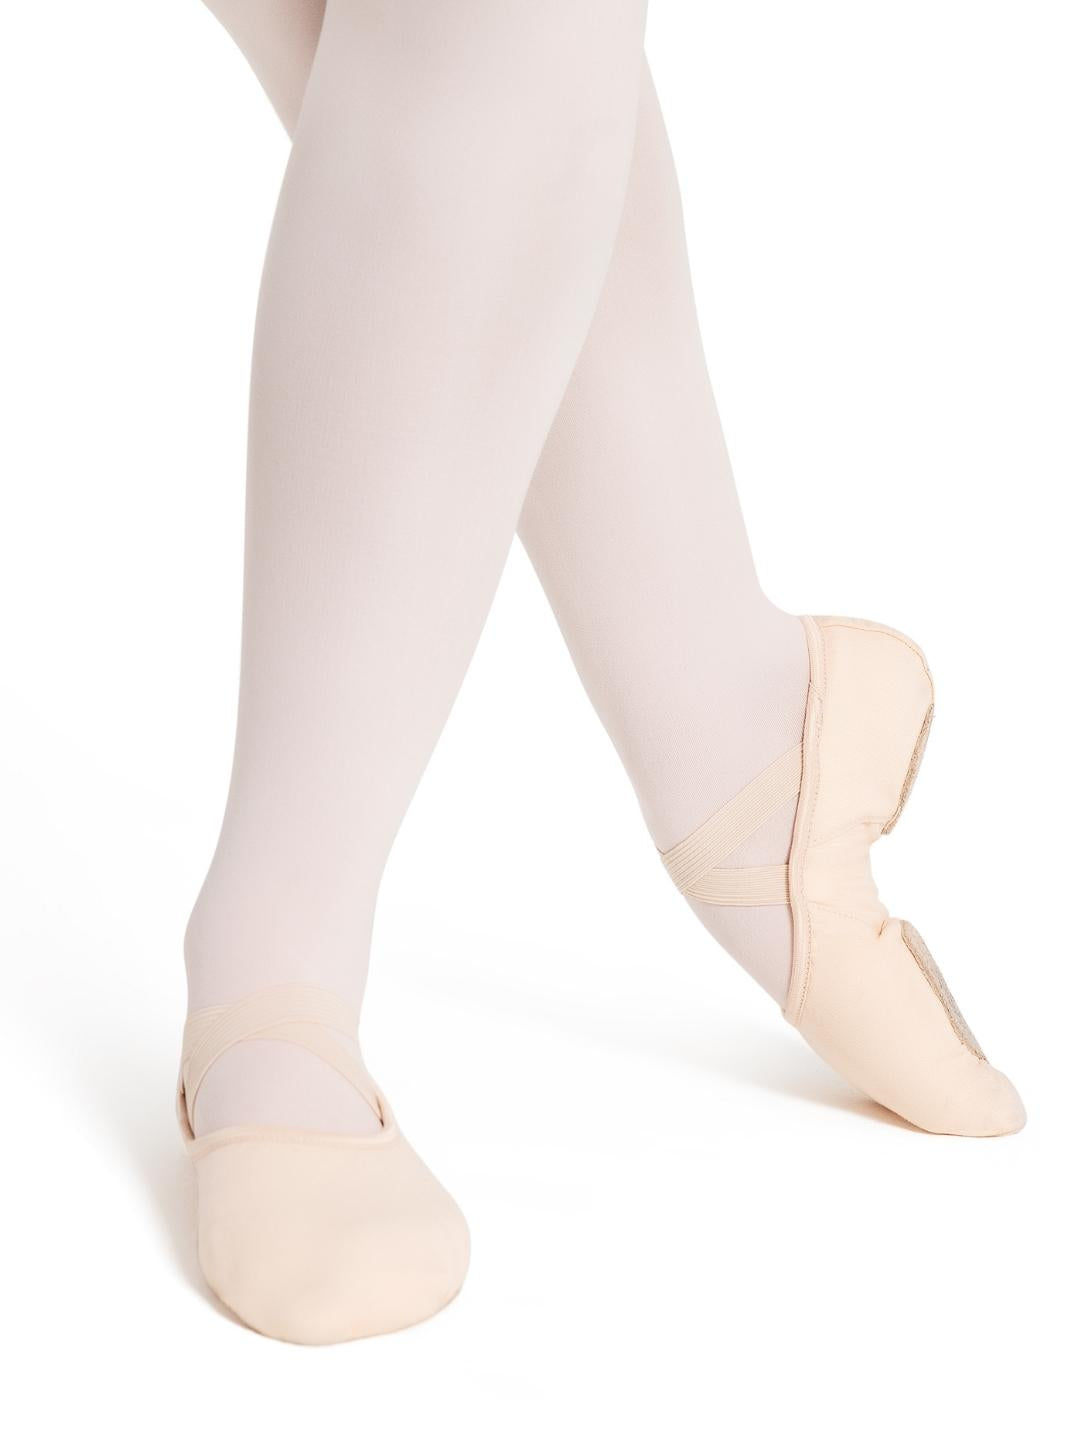 Hanami Canvas Ballet Slipper Adult - Pink and Skin-tones (Capezio 2037)